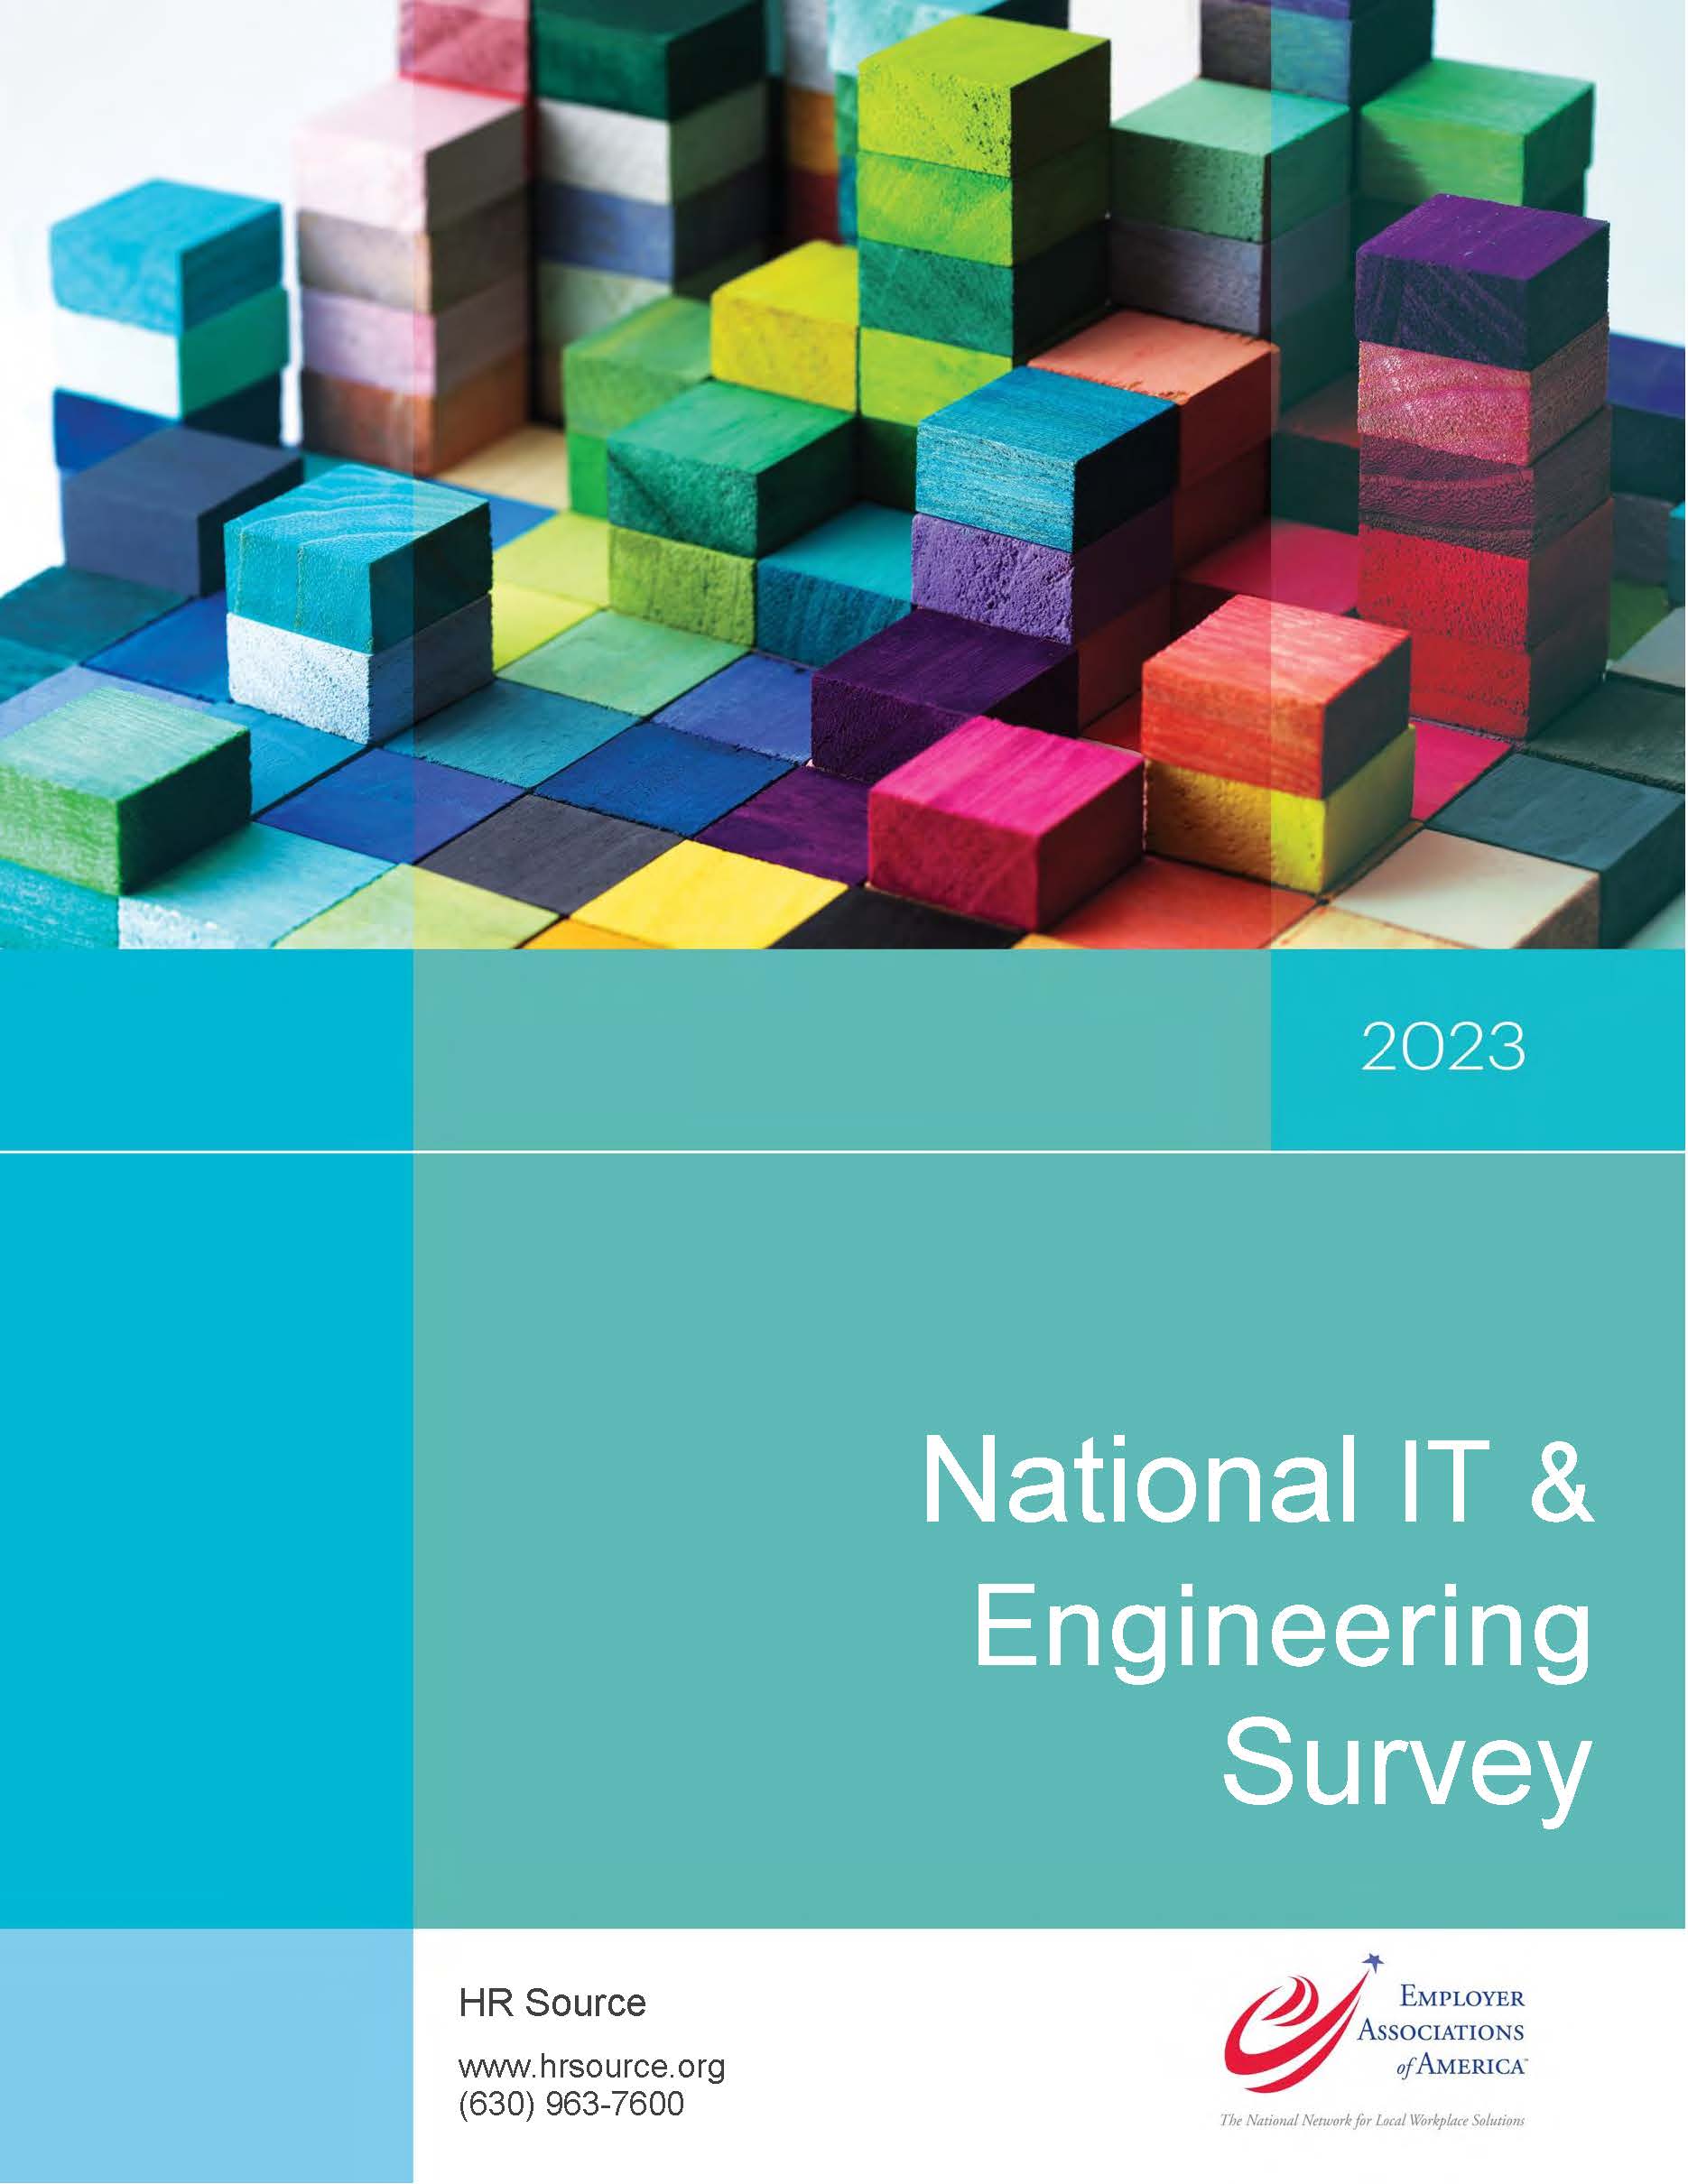 National IT & Engineering Survey 2023